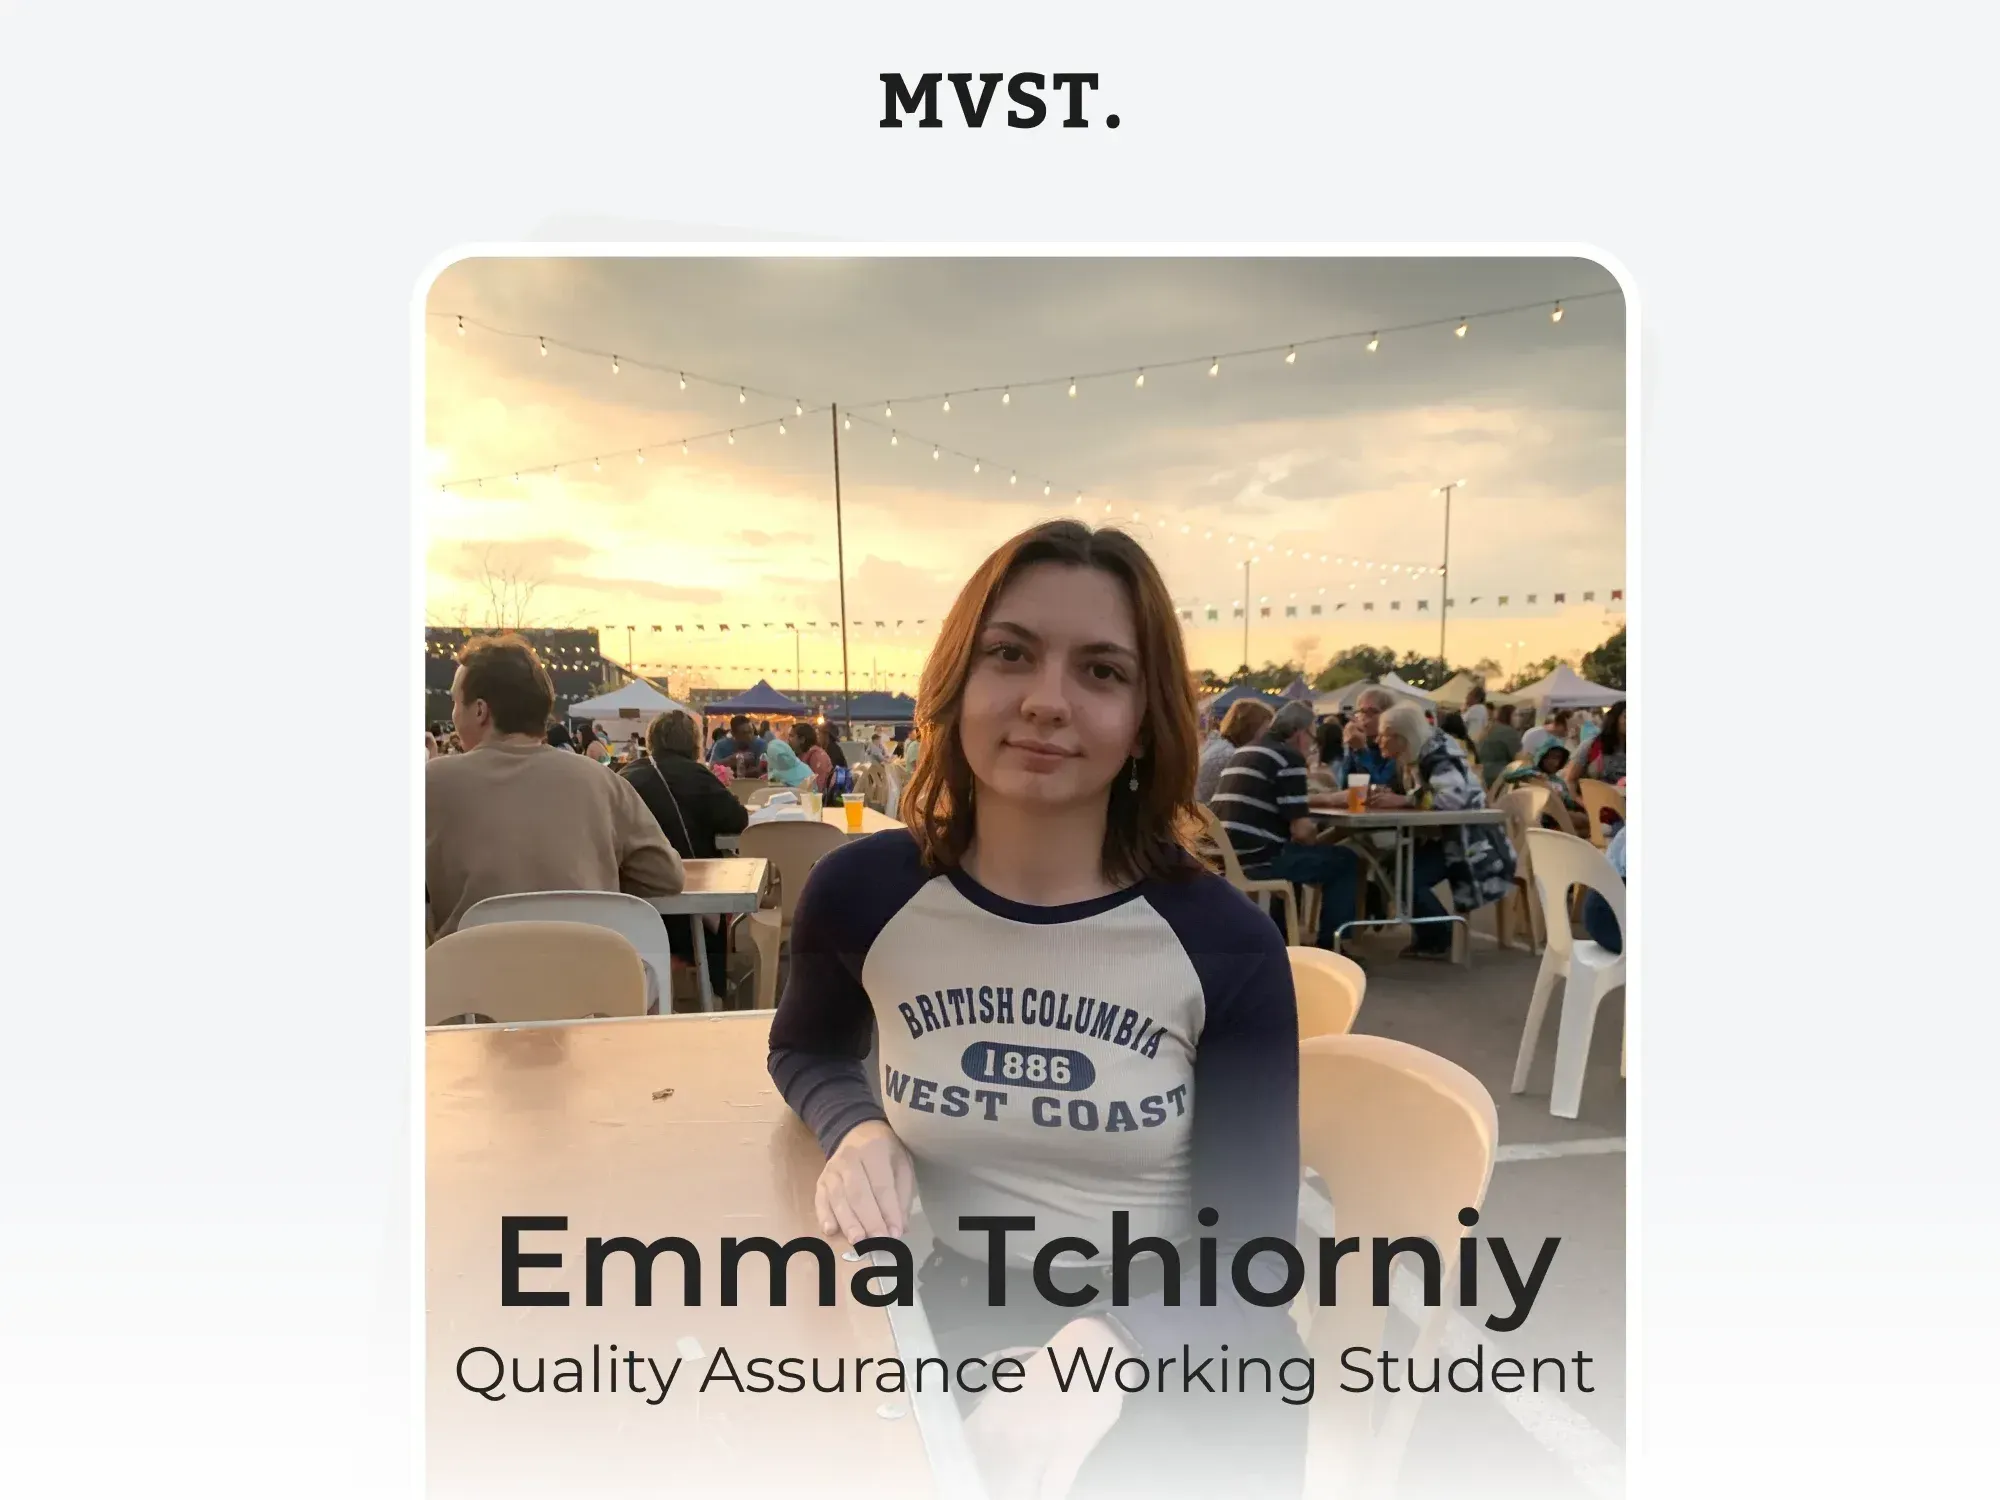 Welcome to MVST, Emma!